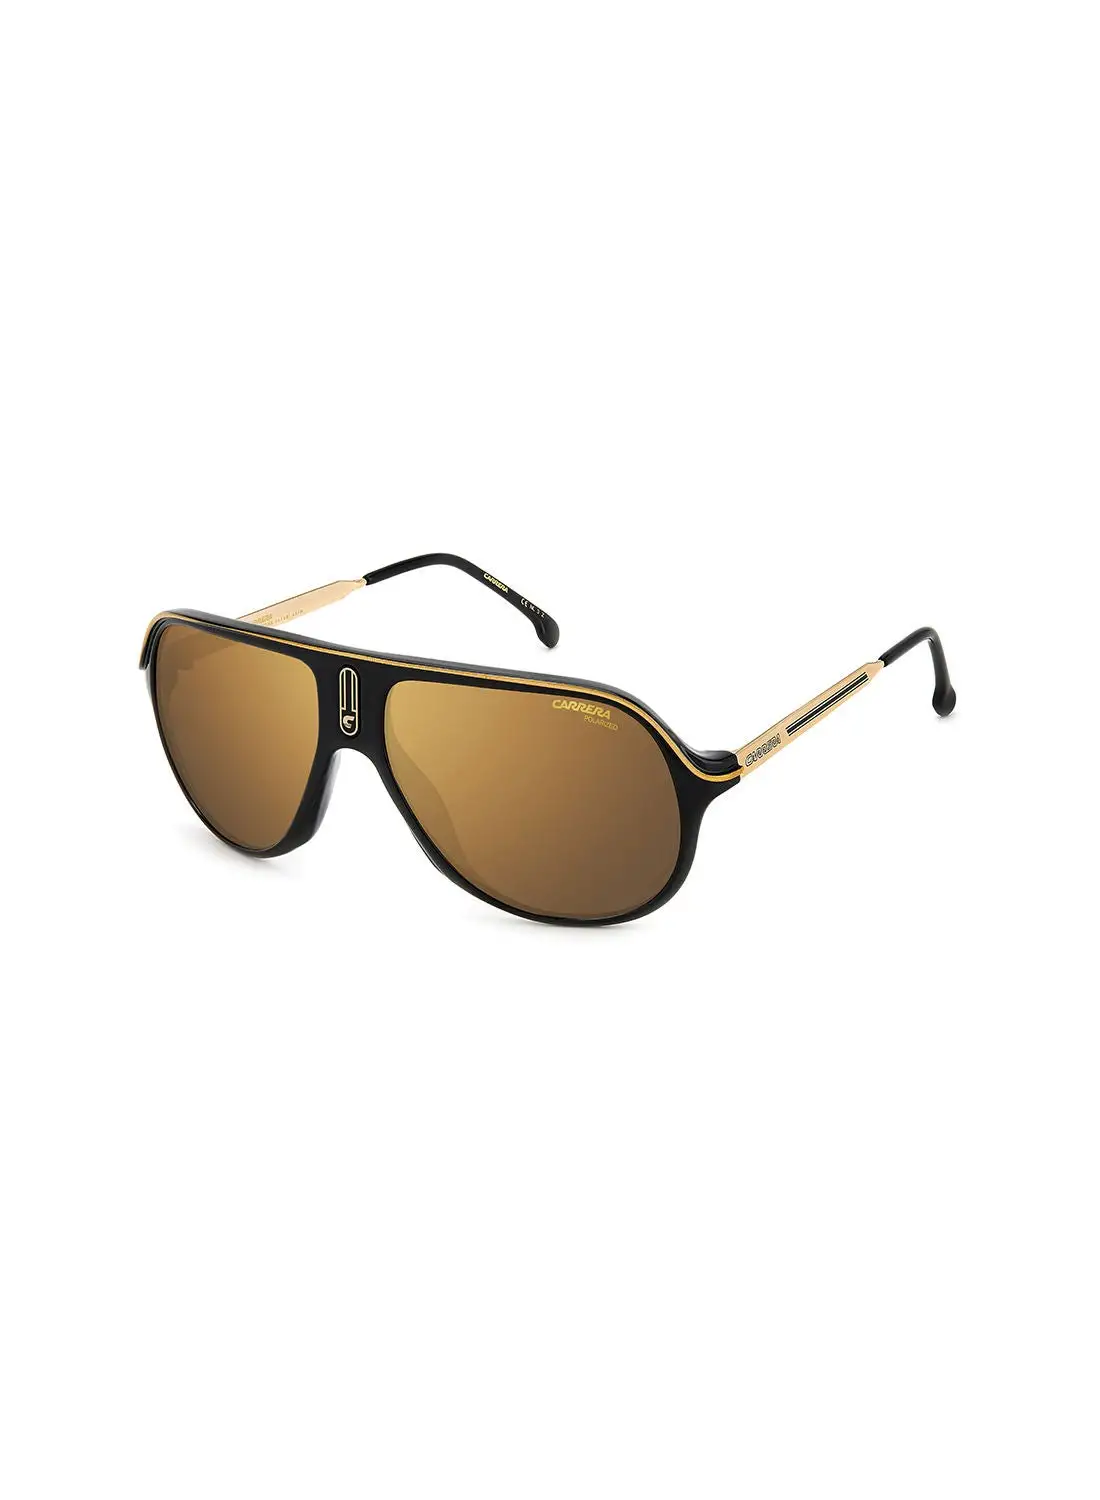 Carrera Unisex UV Protection Navigator Sunglasses - Safari65/N Blk Gold 62 - Lens Size: 62 Mm